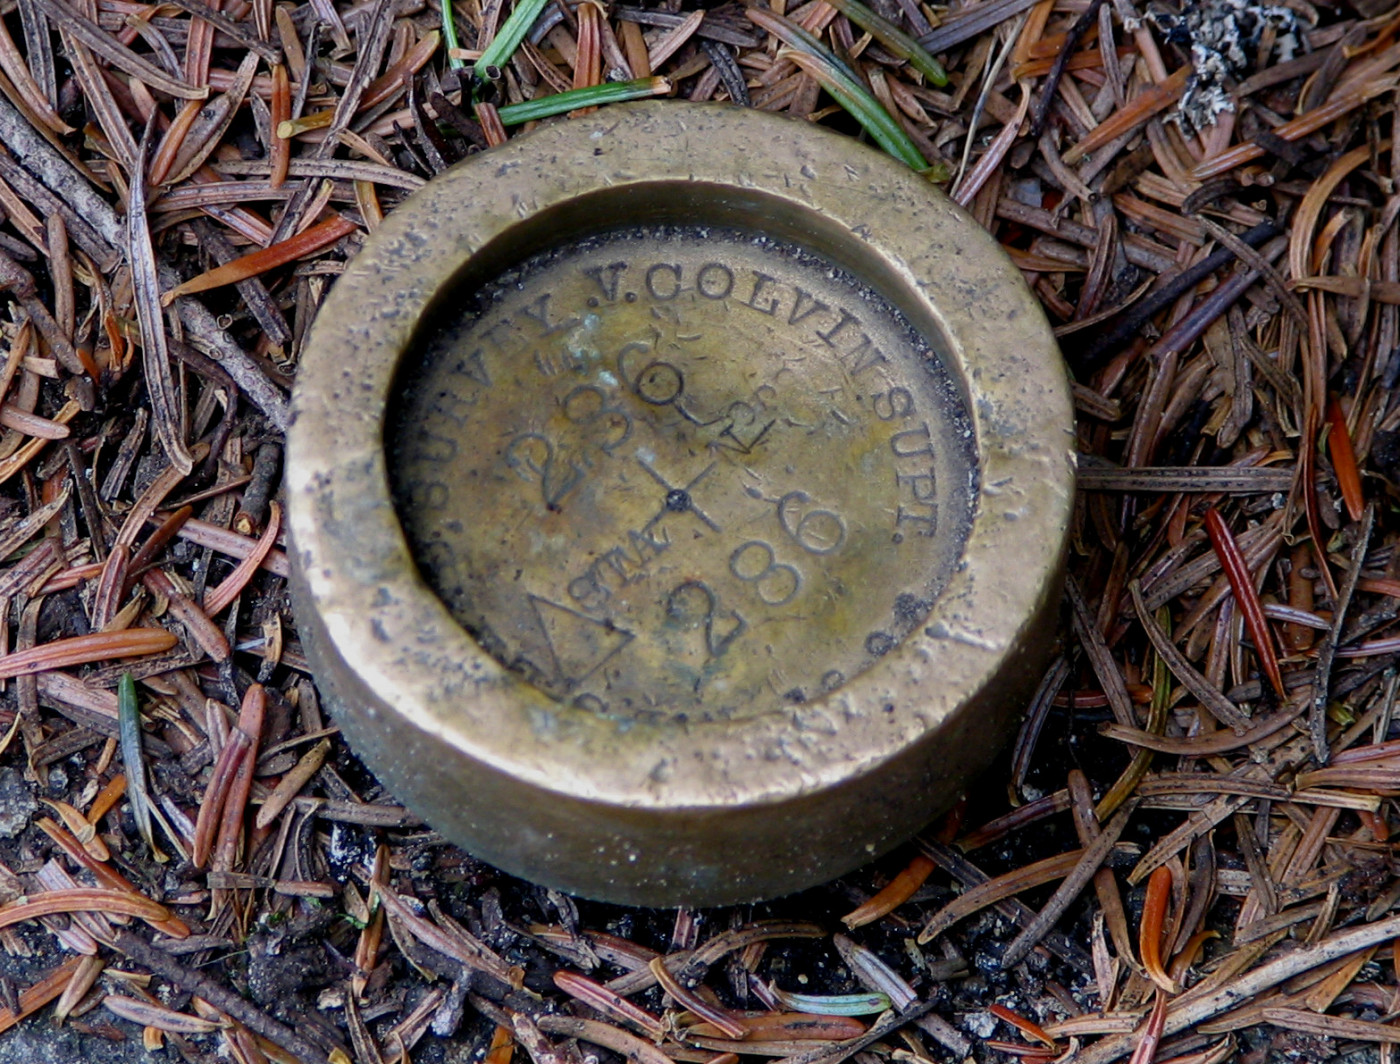 A Colvin survey marker